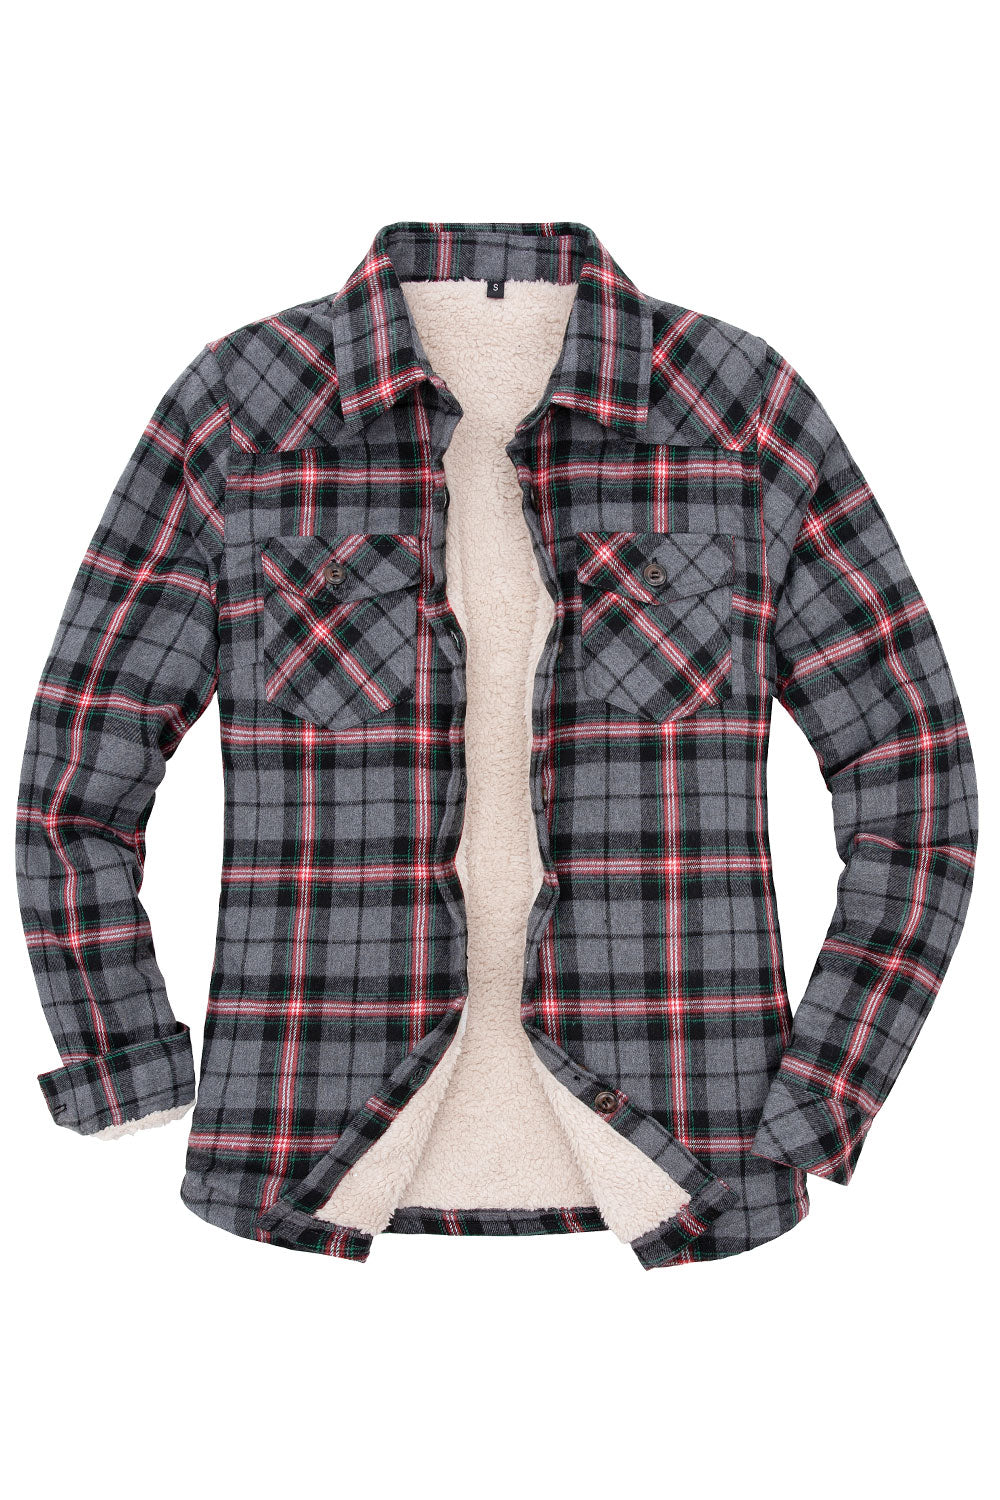 Women's Flannel Shirt Jacket,Sherpa-Lined Plaid